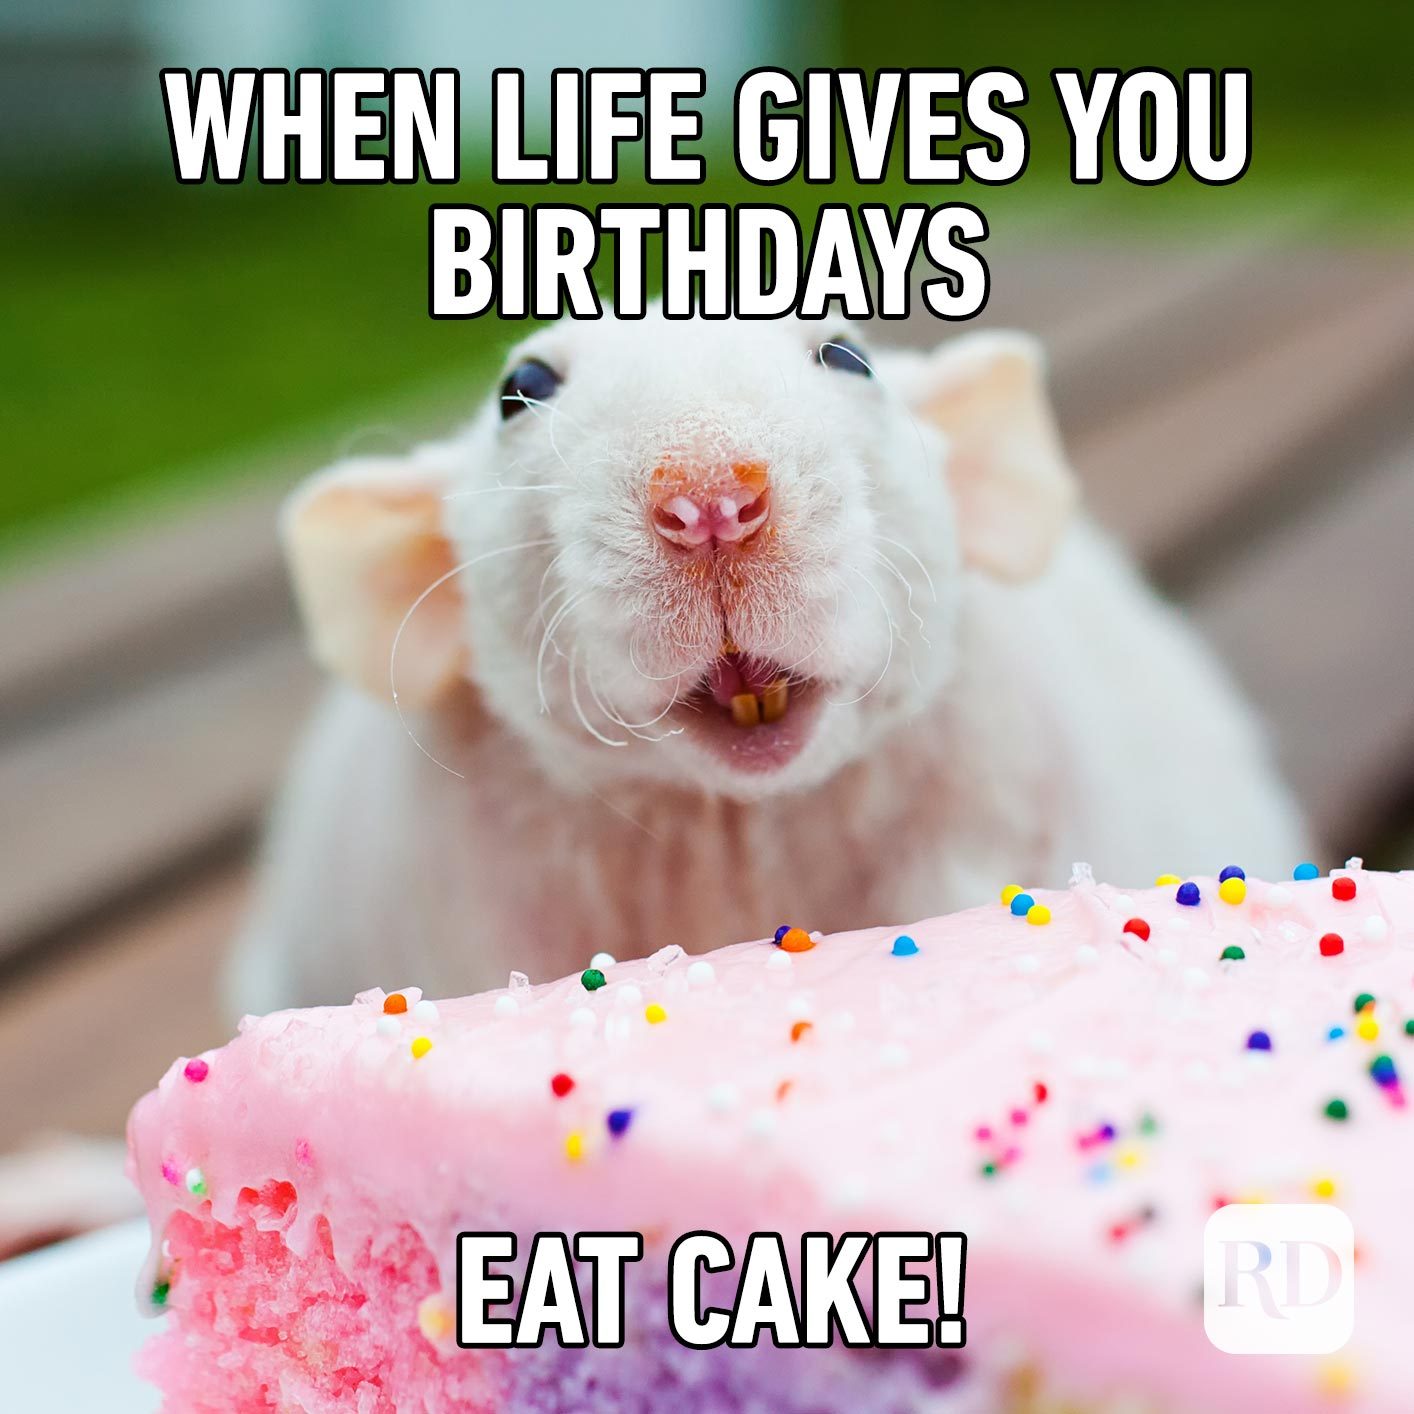 Happy Birthday Memes With Cats